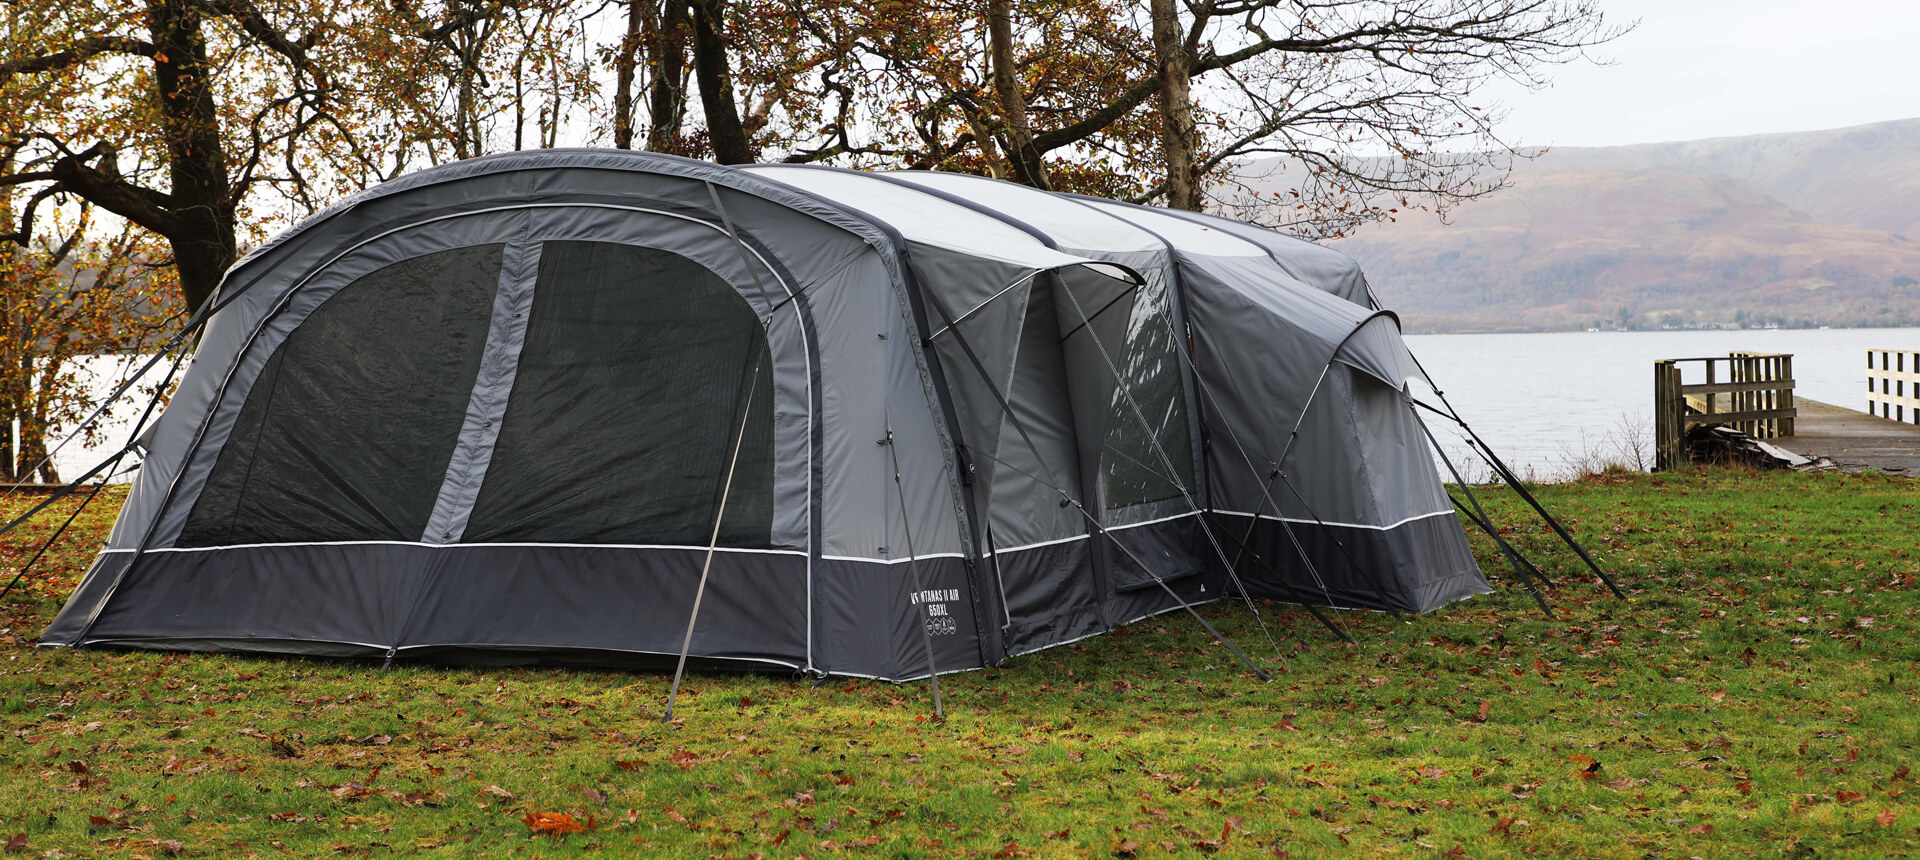 Tent types